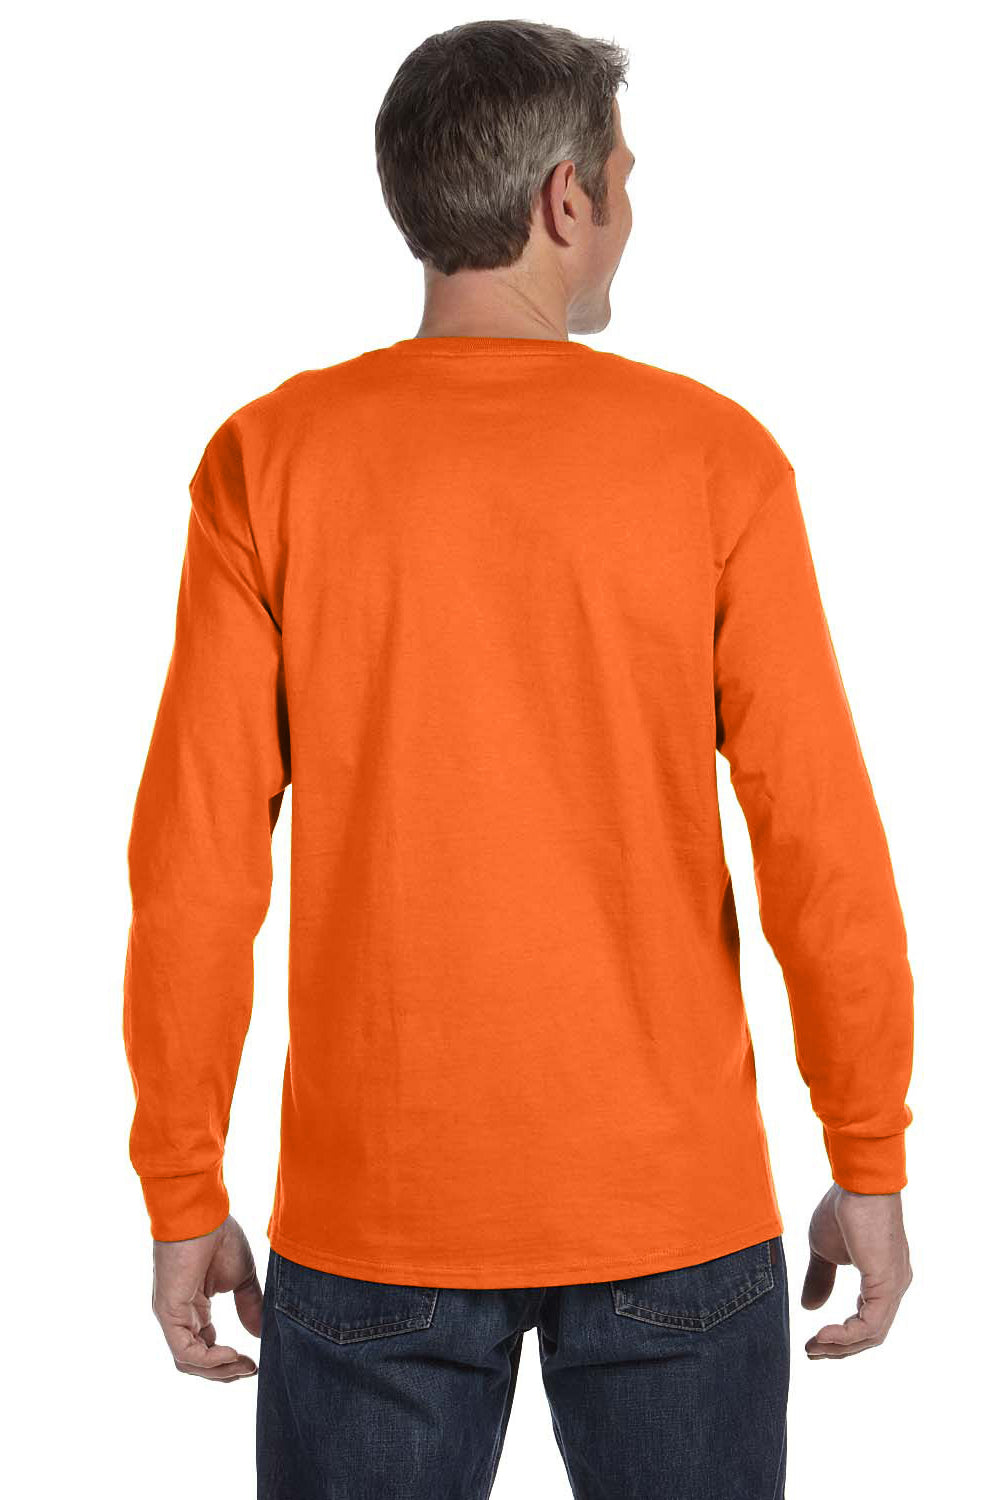 Gildan G540 Mens Long Sleeve Crewneck T-Shirt Safety Orange Back